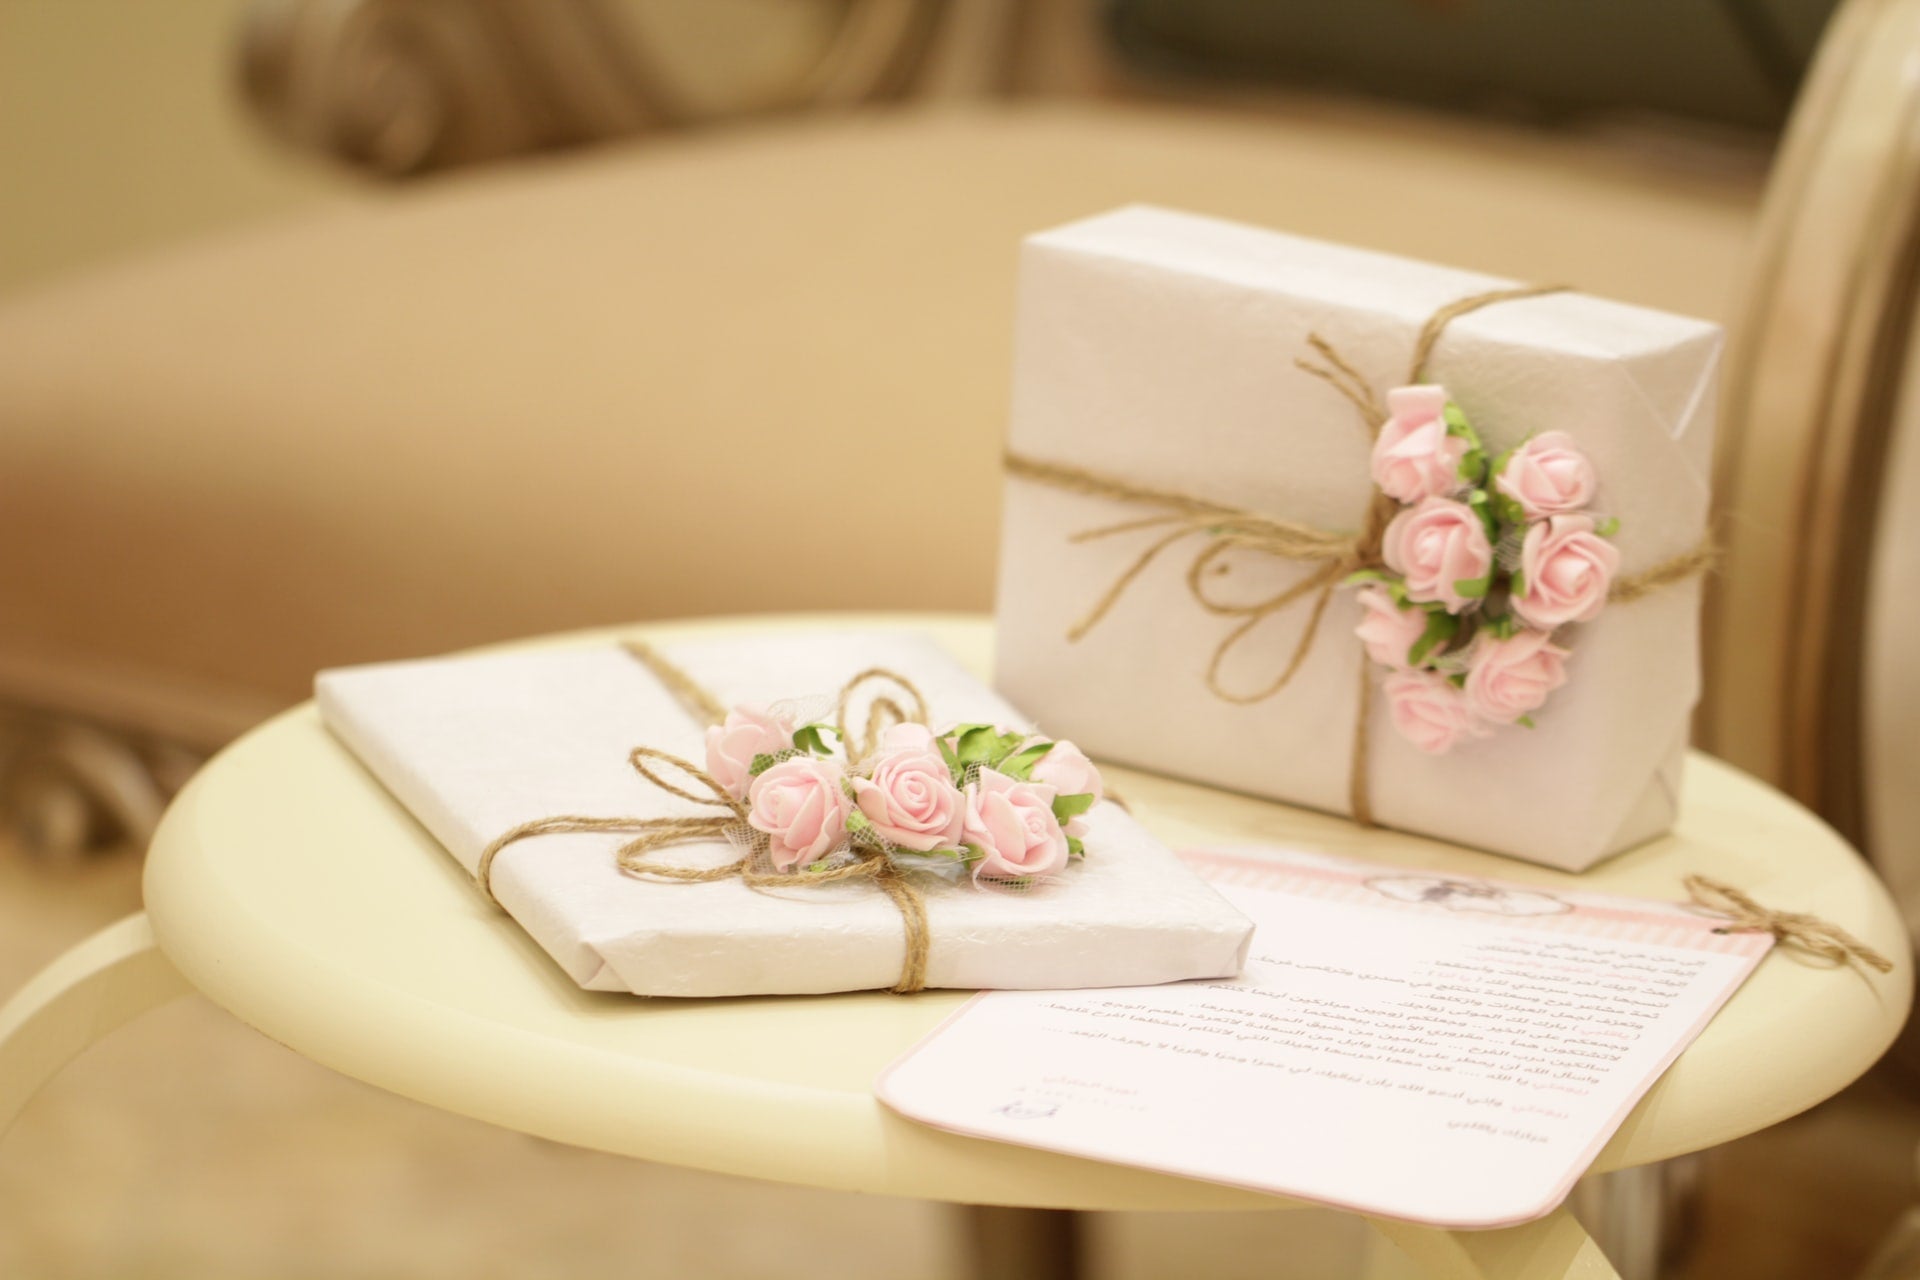 Wedding gift ideas | Anniversary gifts | Bombus